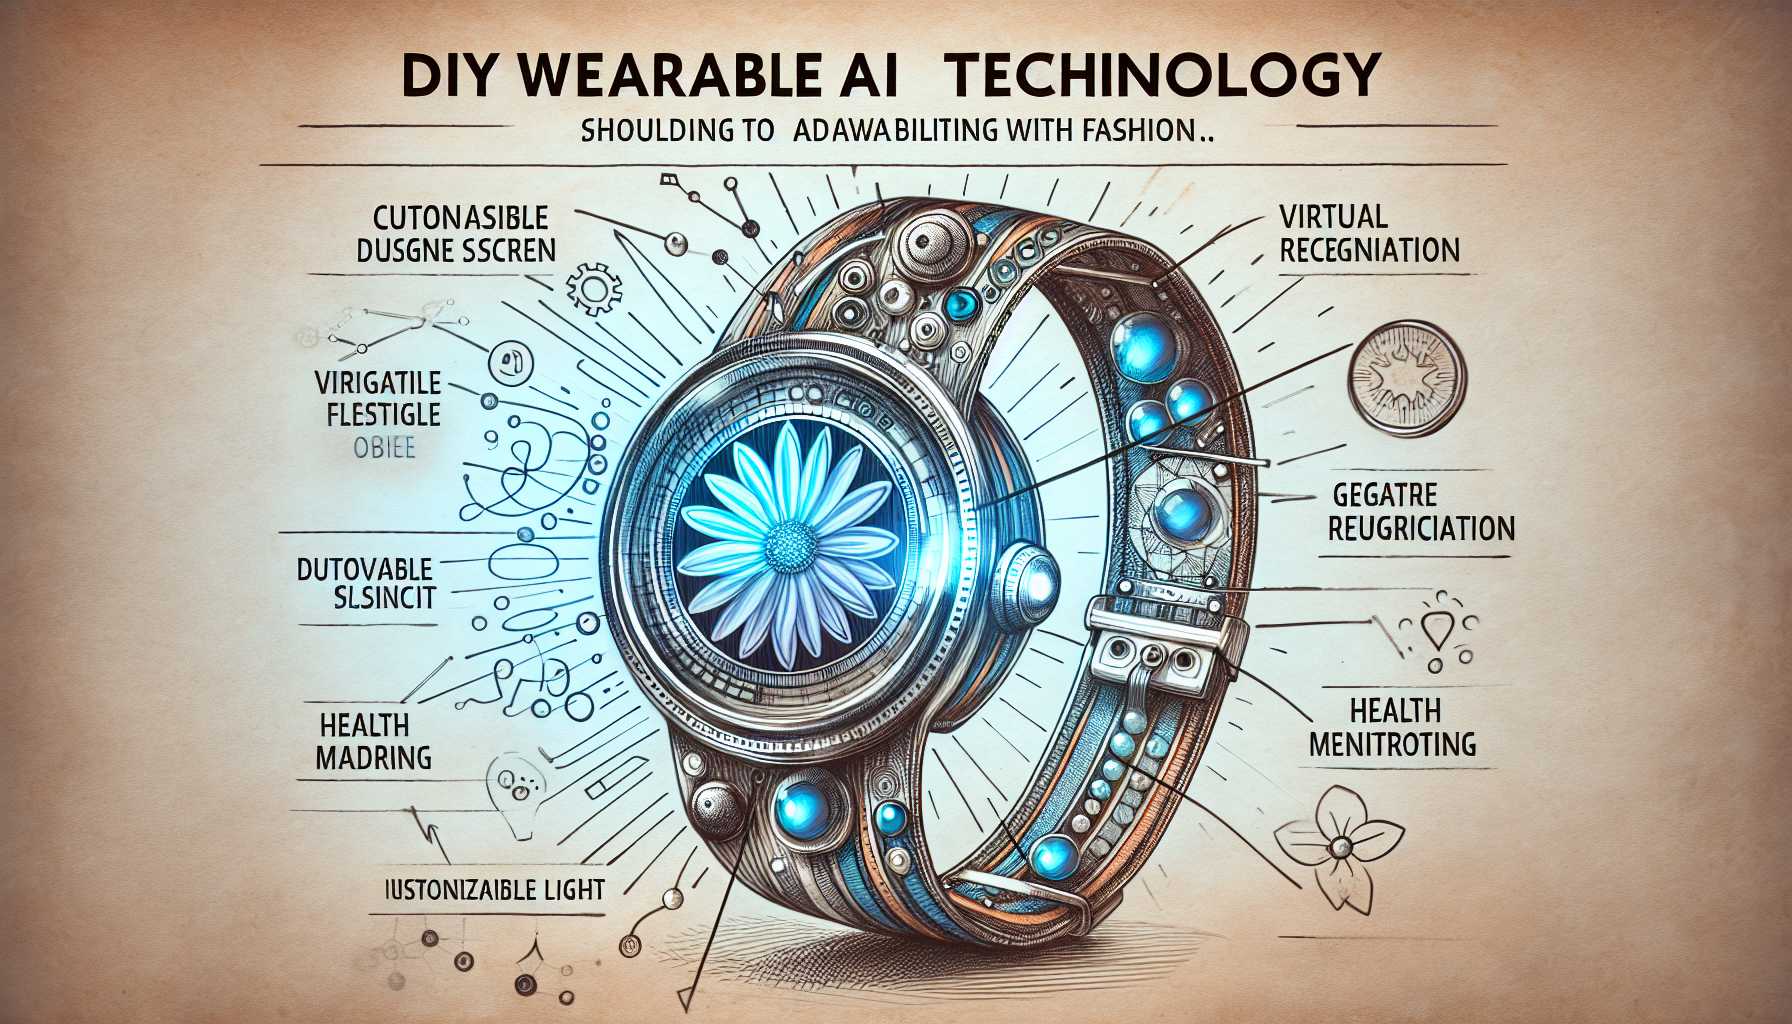 DIY wearable AI technology device